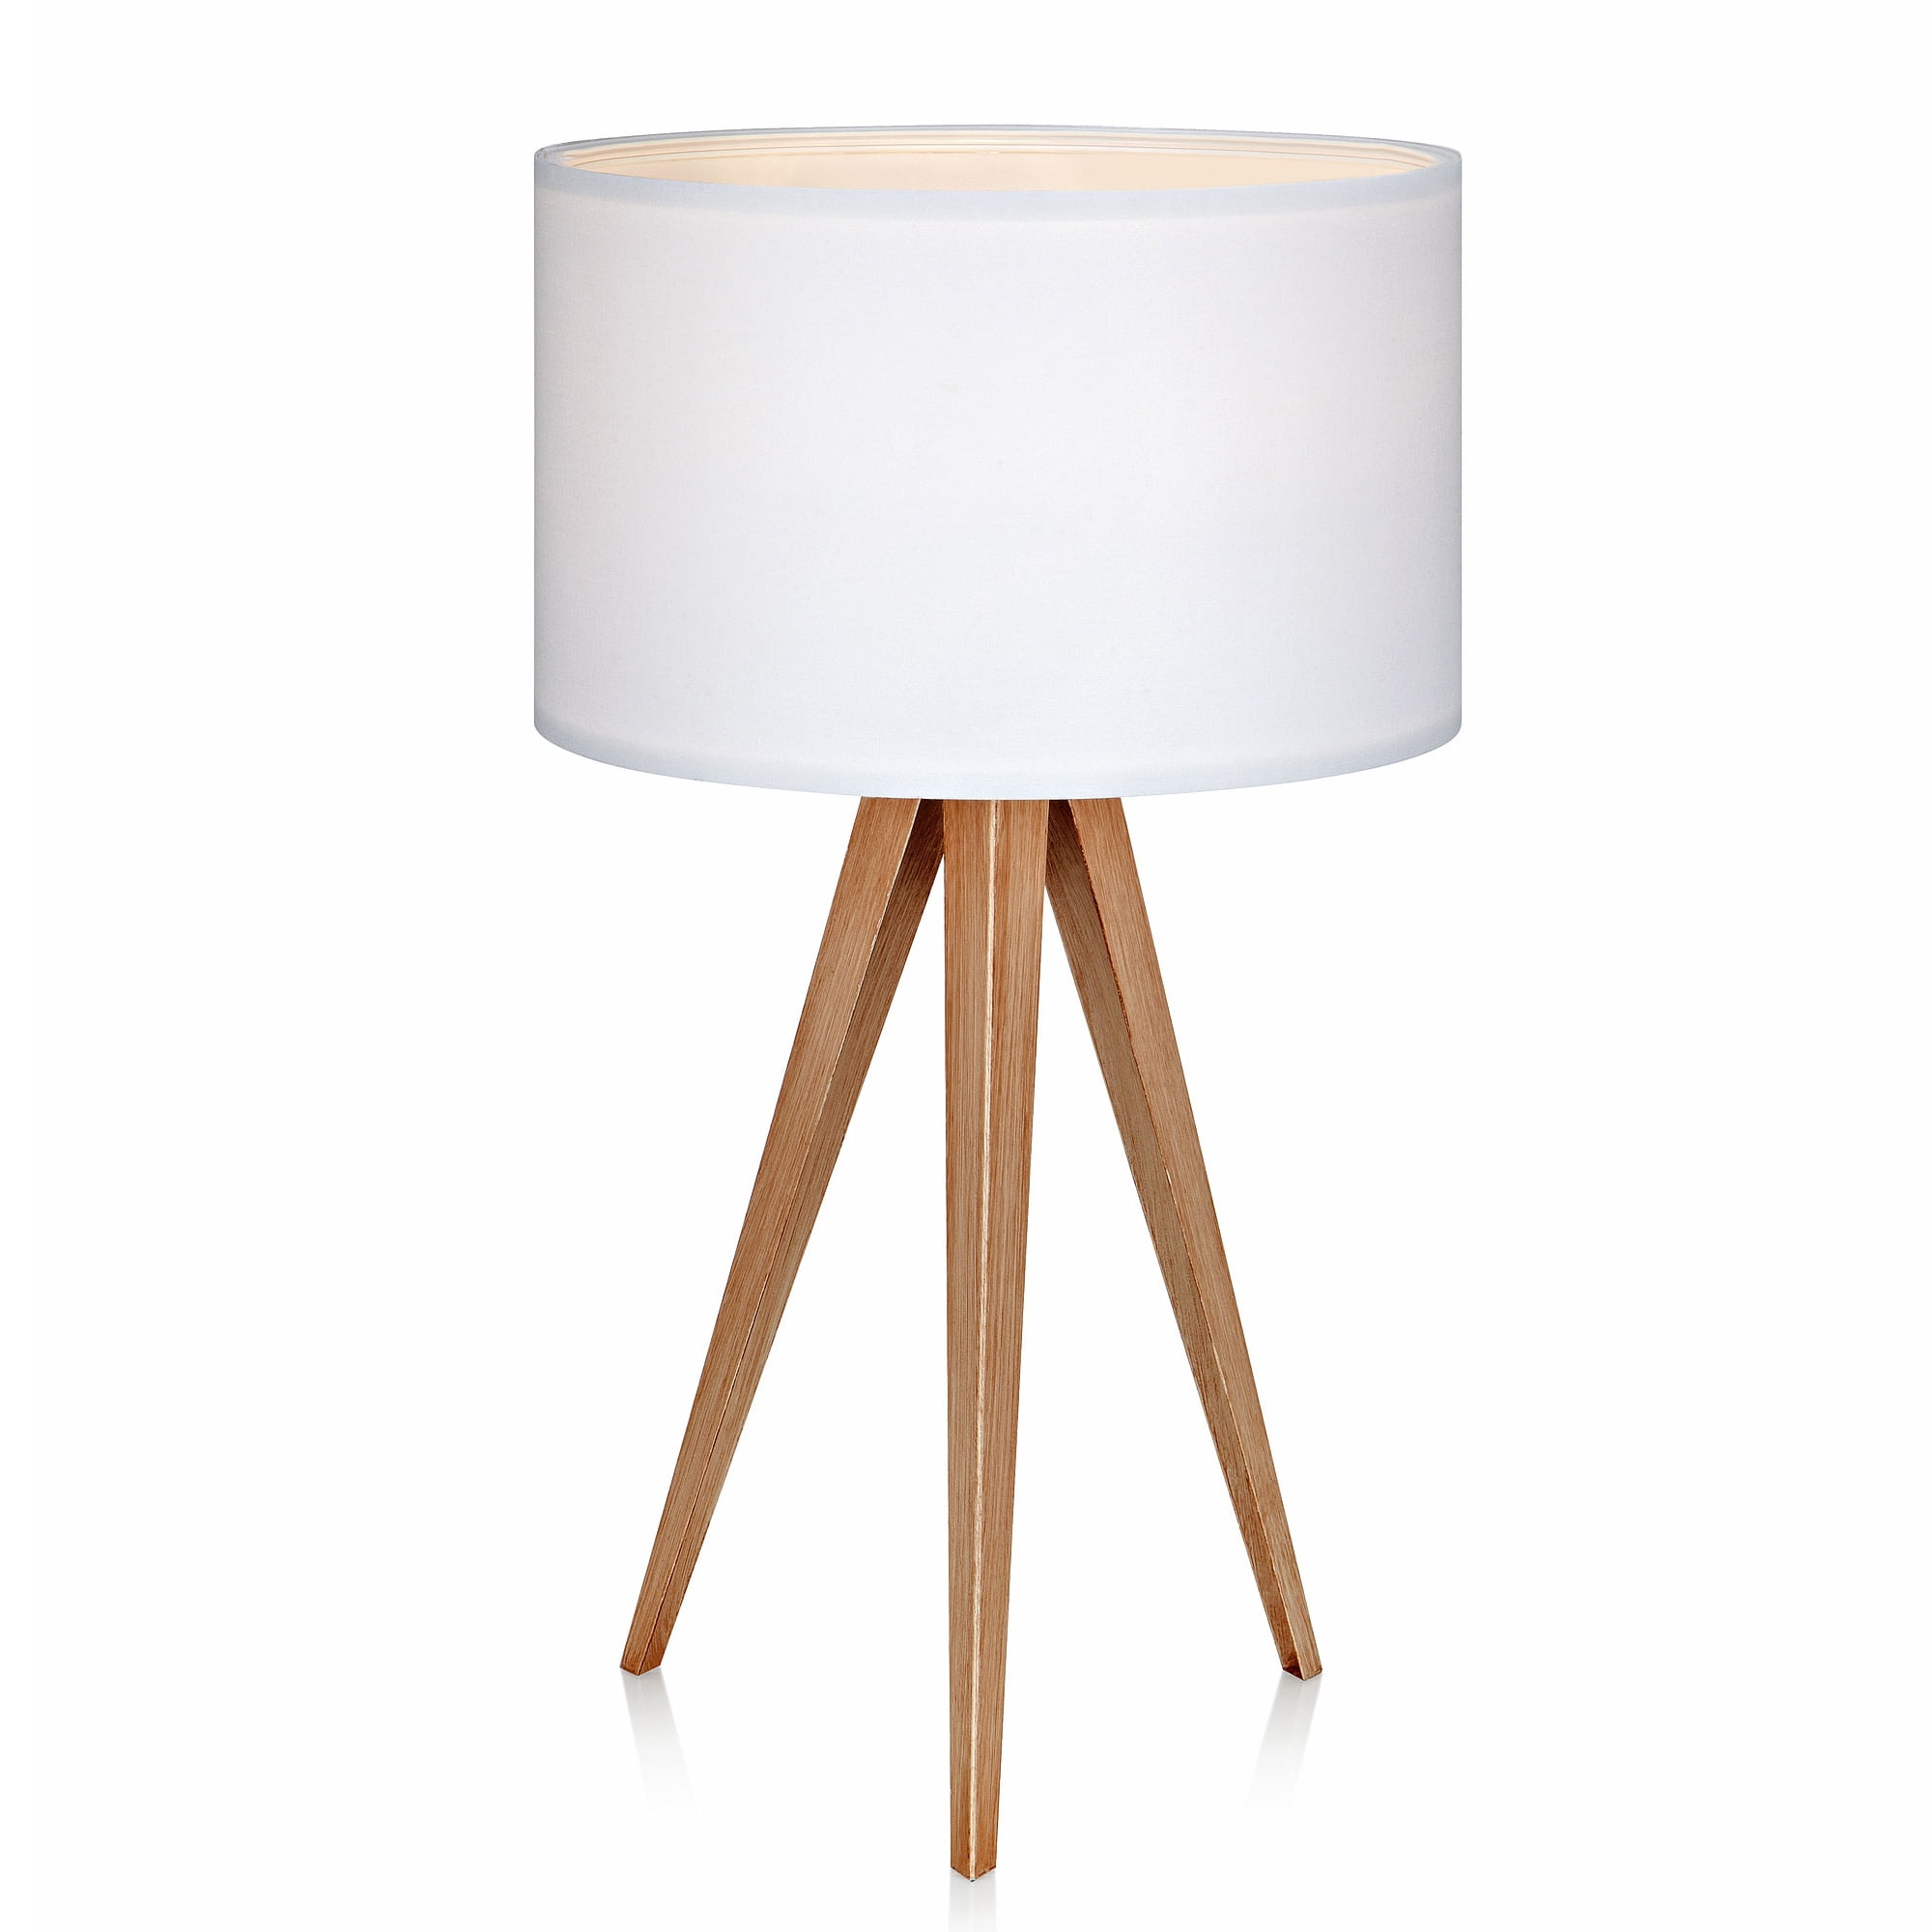 Woven Paths Versanora Romanza 20 07, Designs Direct Tripod Table Lamp With White Linen Shade